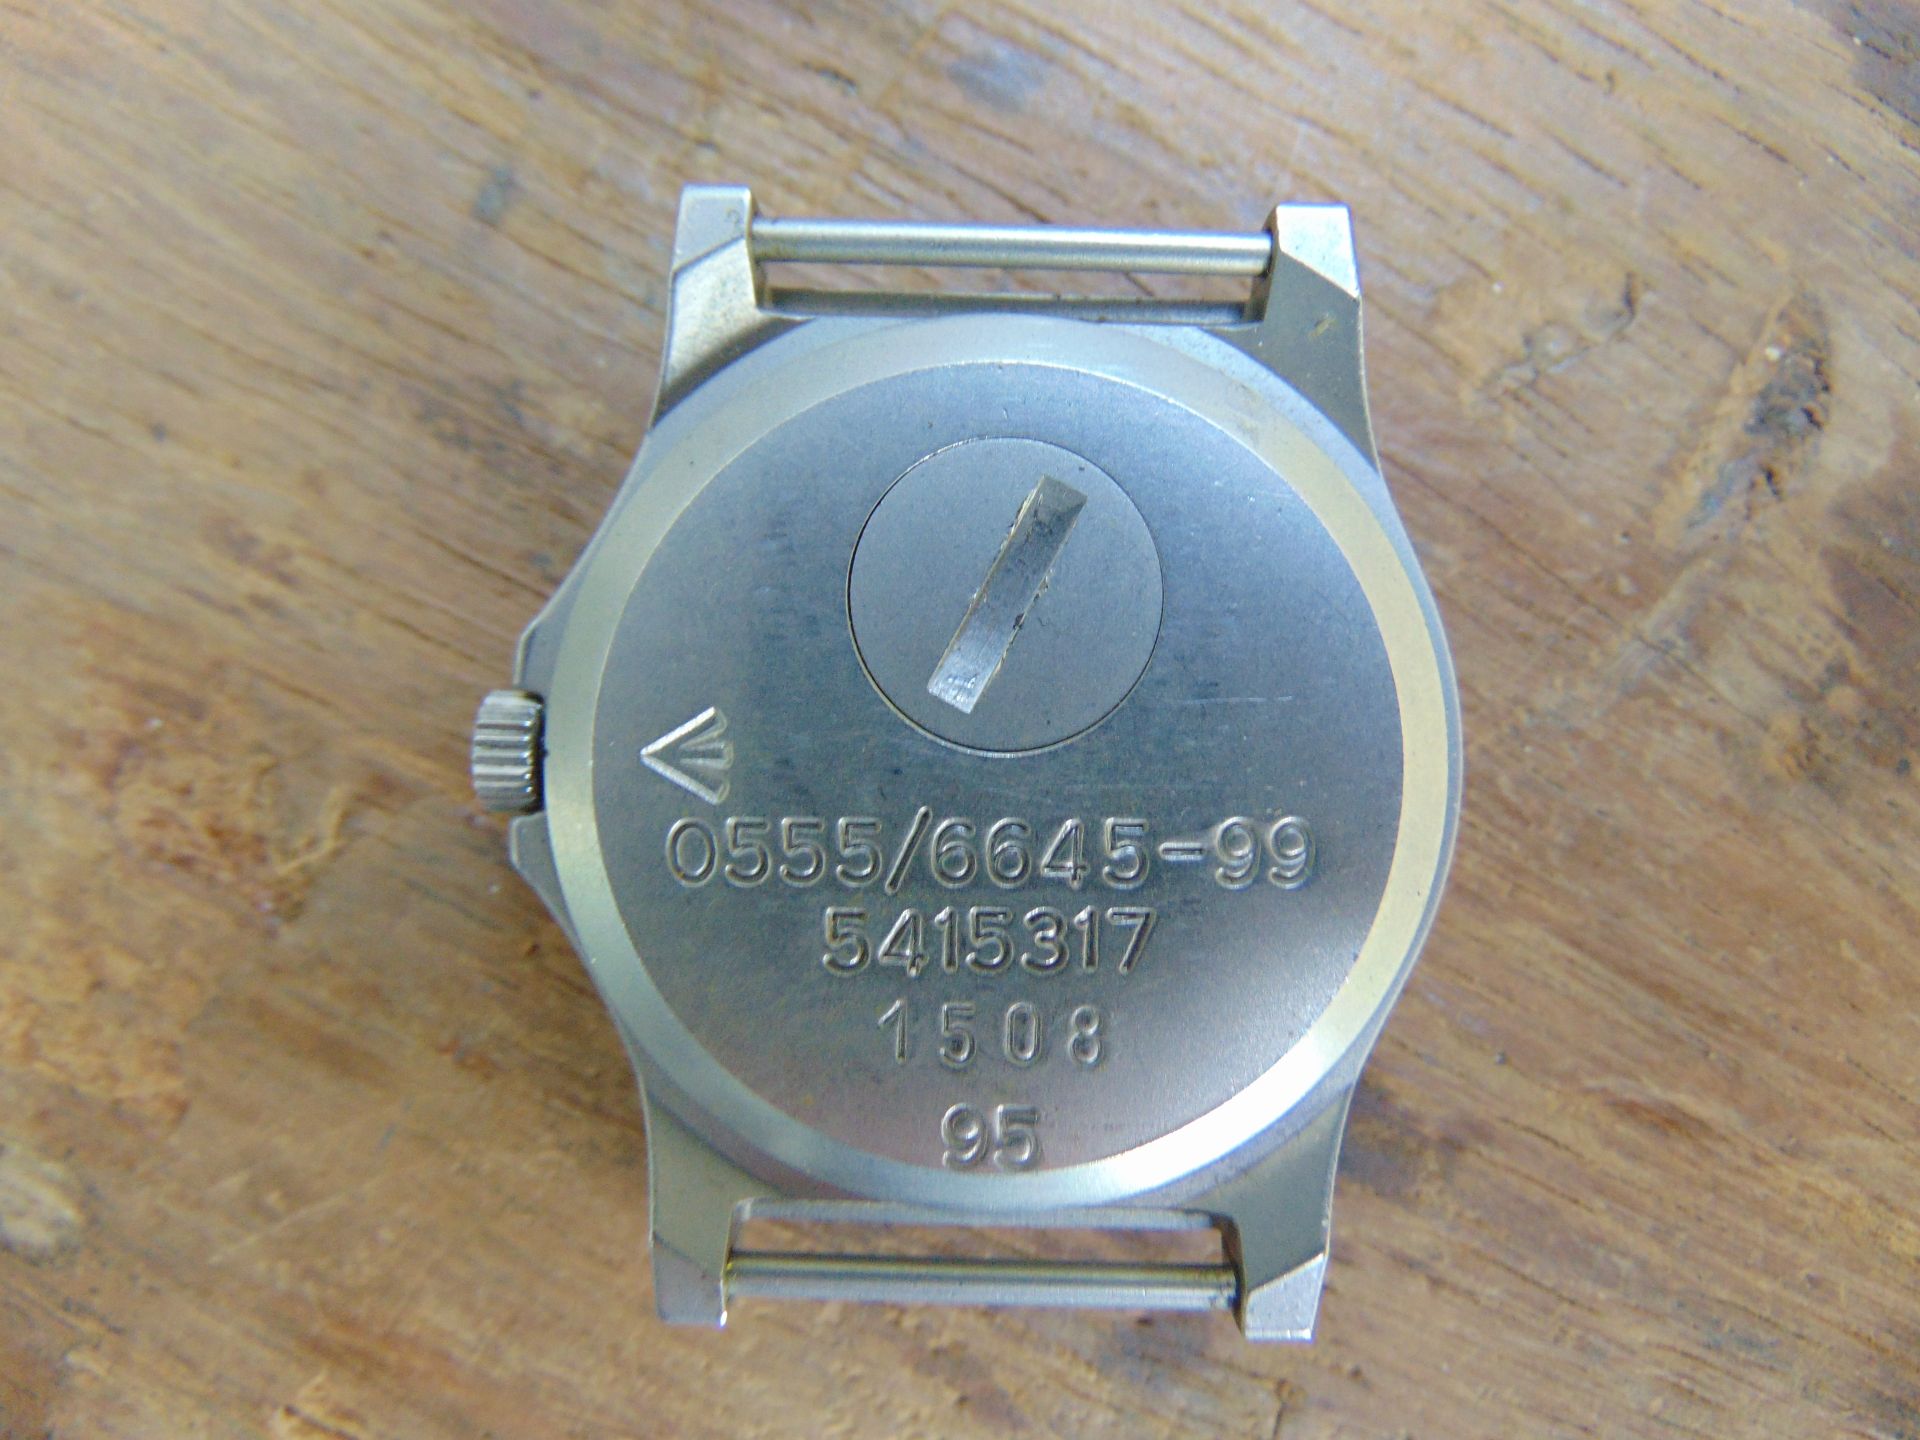 1 Genuine British Army, CWC quartz wrist watch - Image 5 of 5